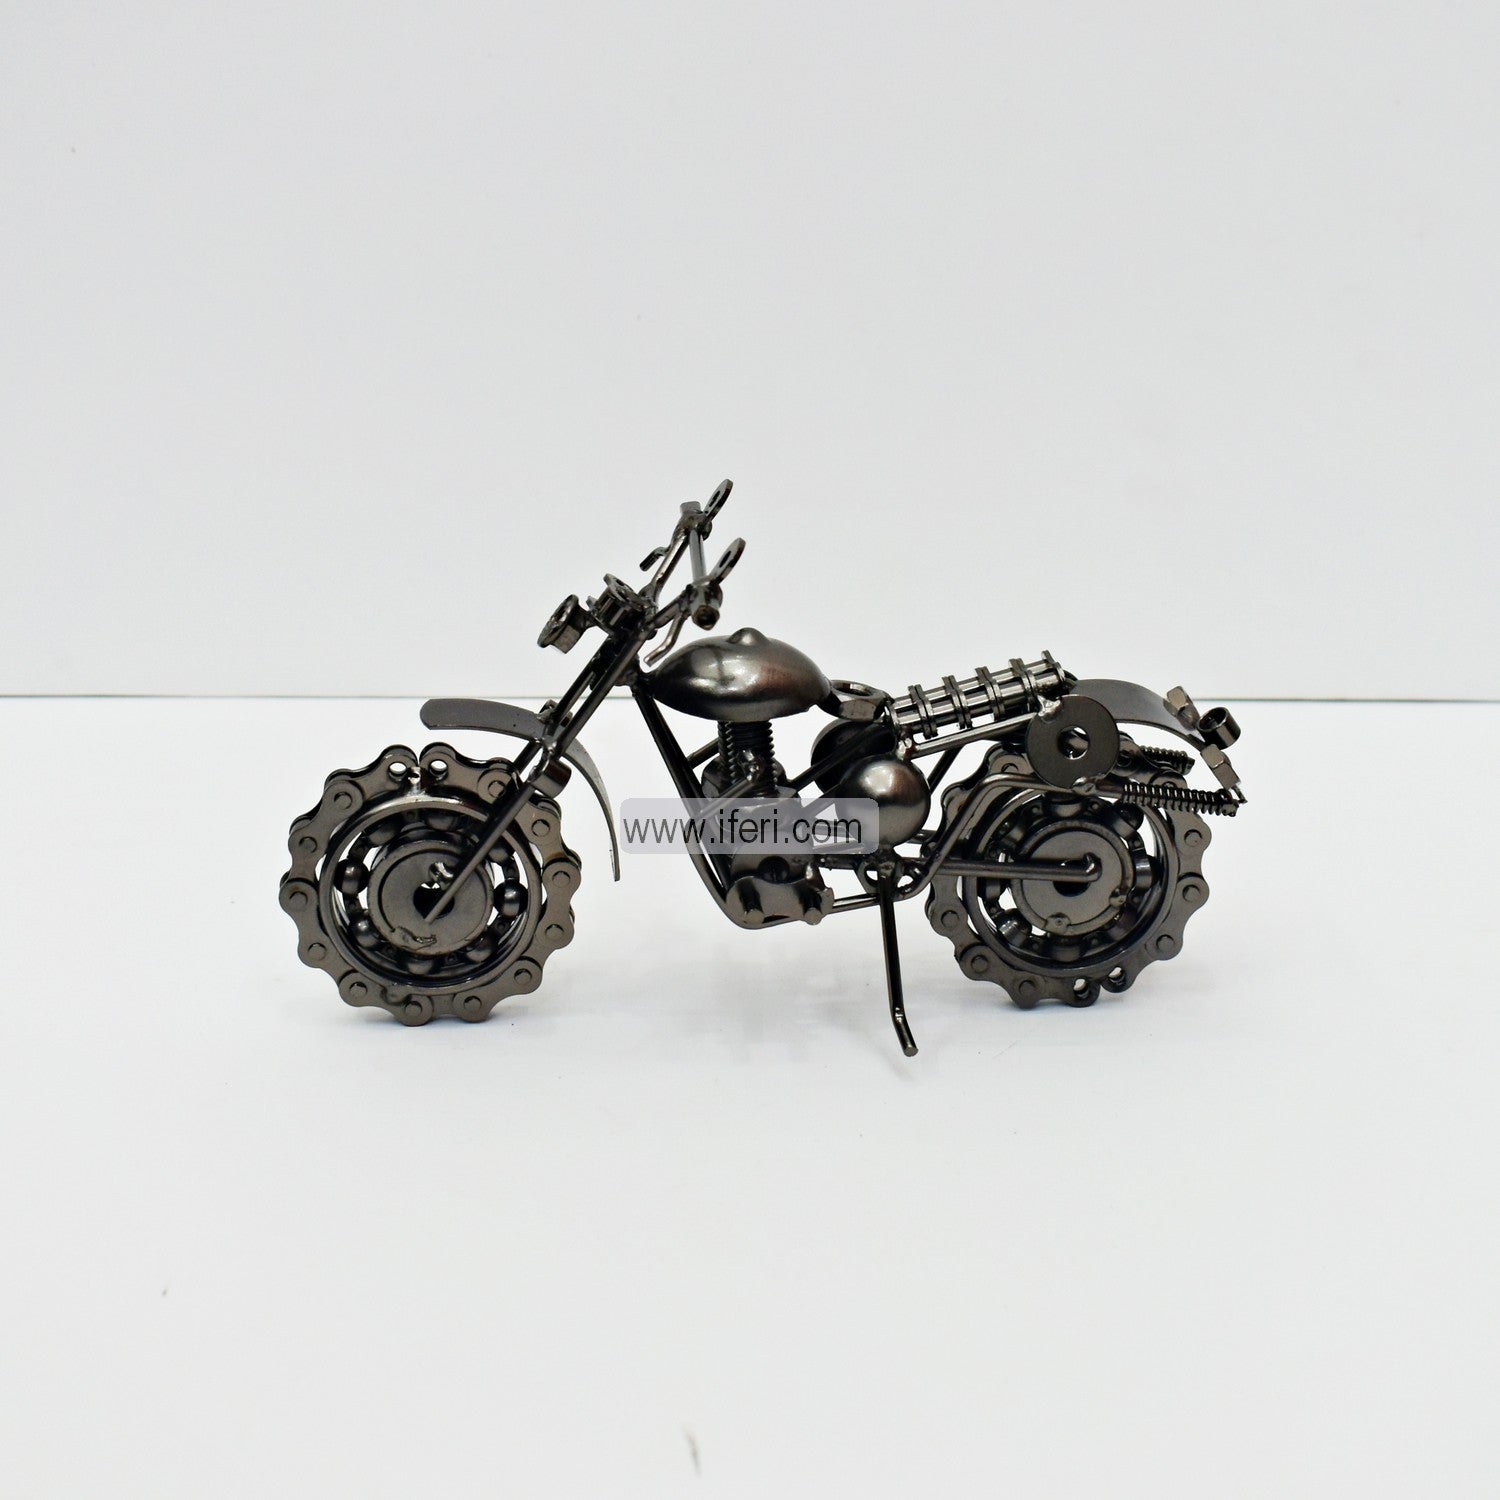 7.5 Inch Metal Motorcycle Model Sculpture Showpiece RY03860